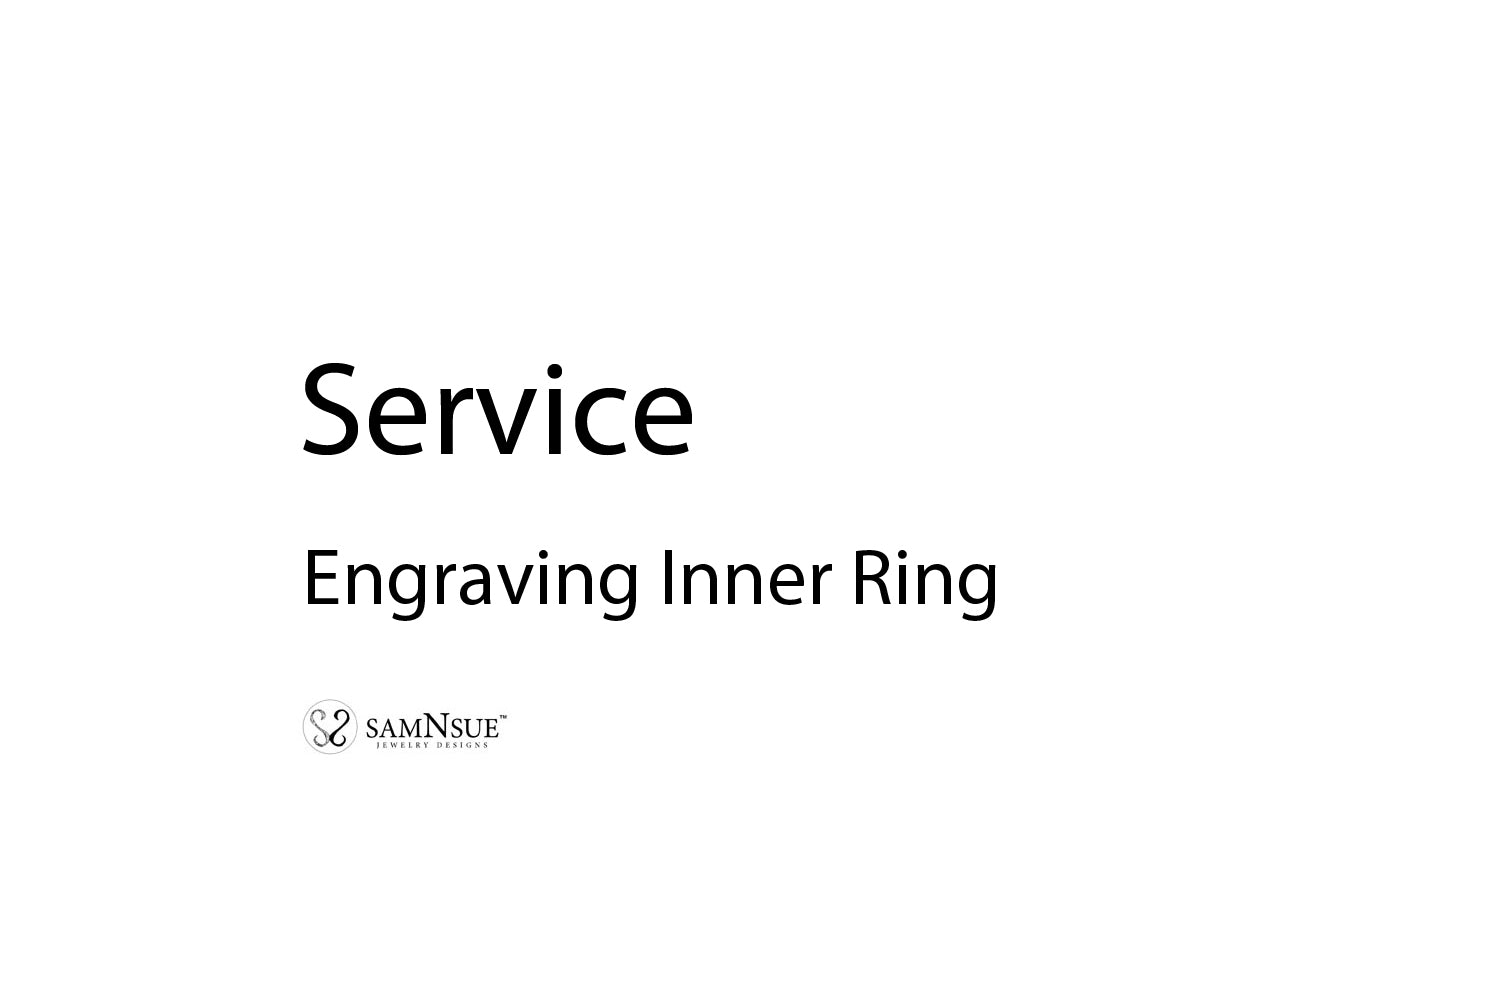 Service - Engraving Inner Ring